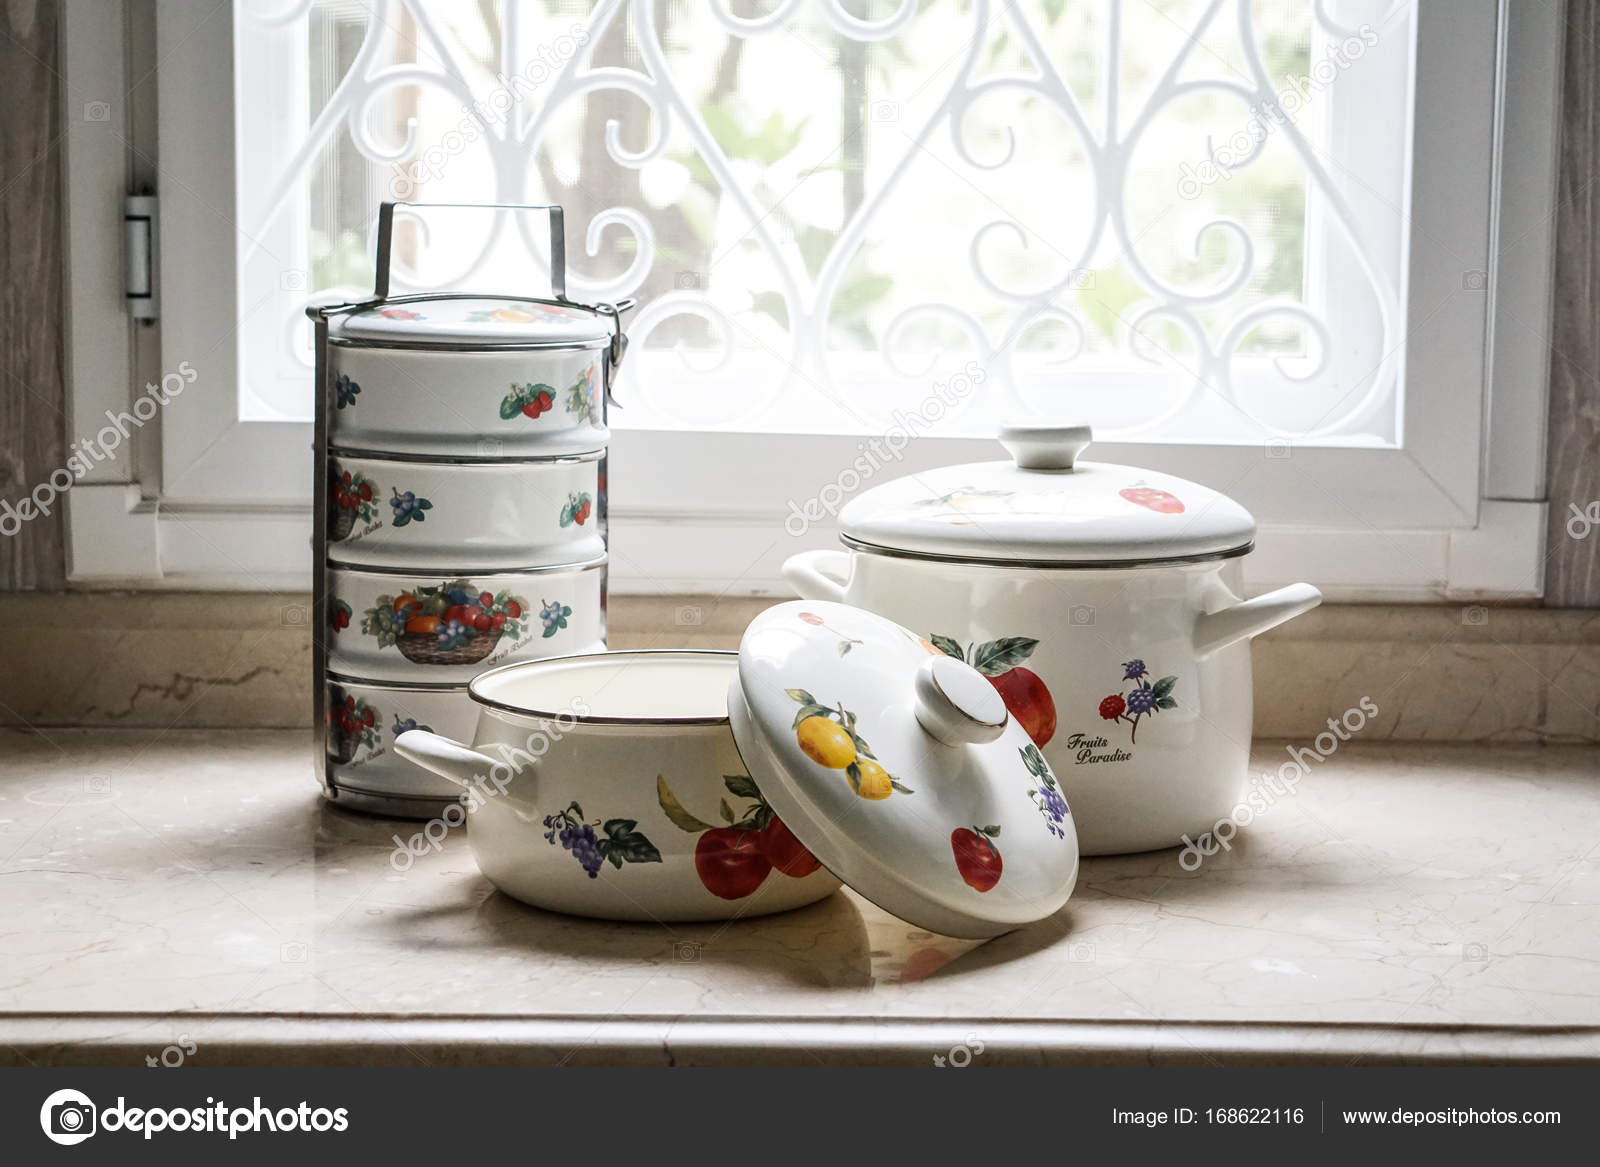 https://st3.depositphotos.com/9357008/16862/i/1600/depositphotos_168622116-stock-photo-vintage-cooking-pot-and-tiffin.jpg